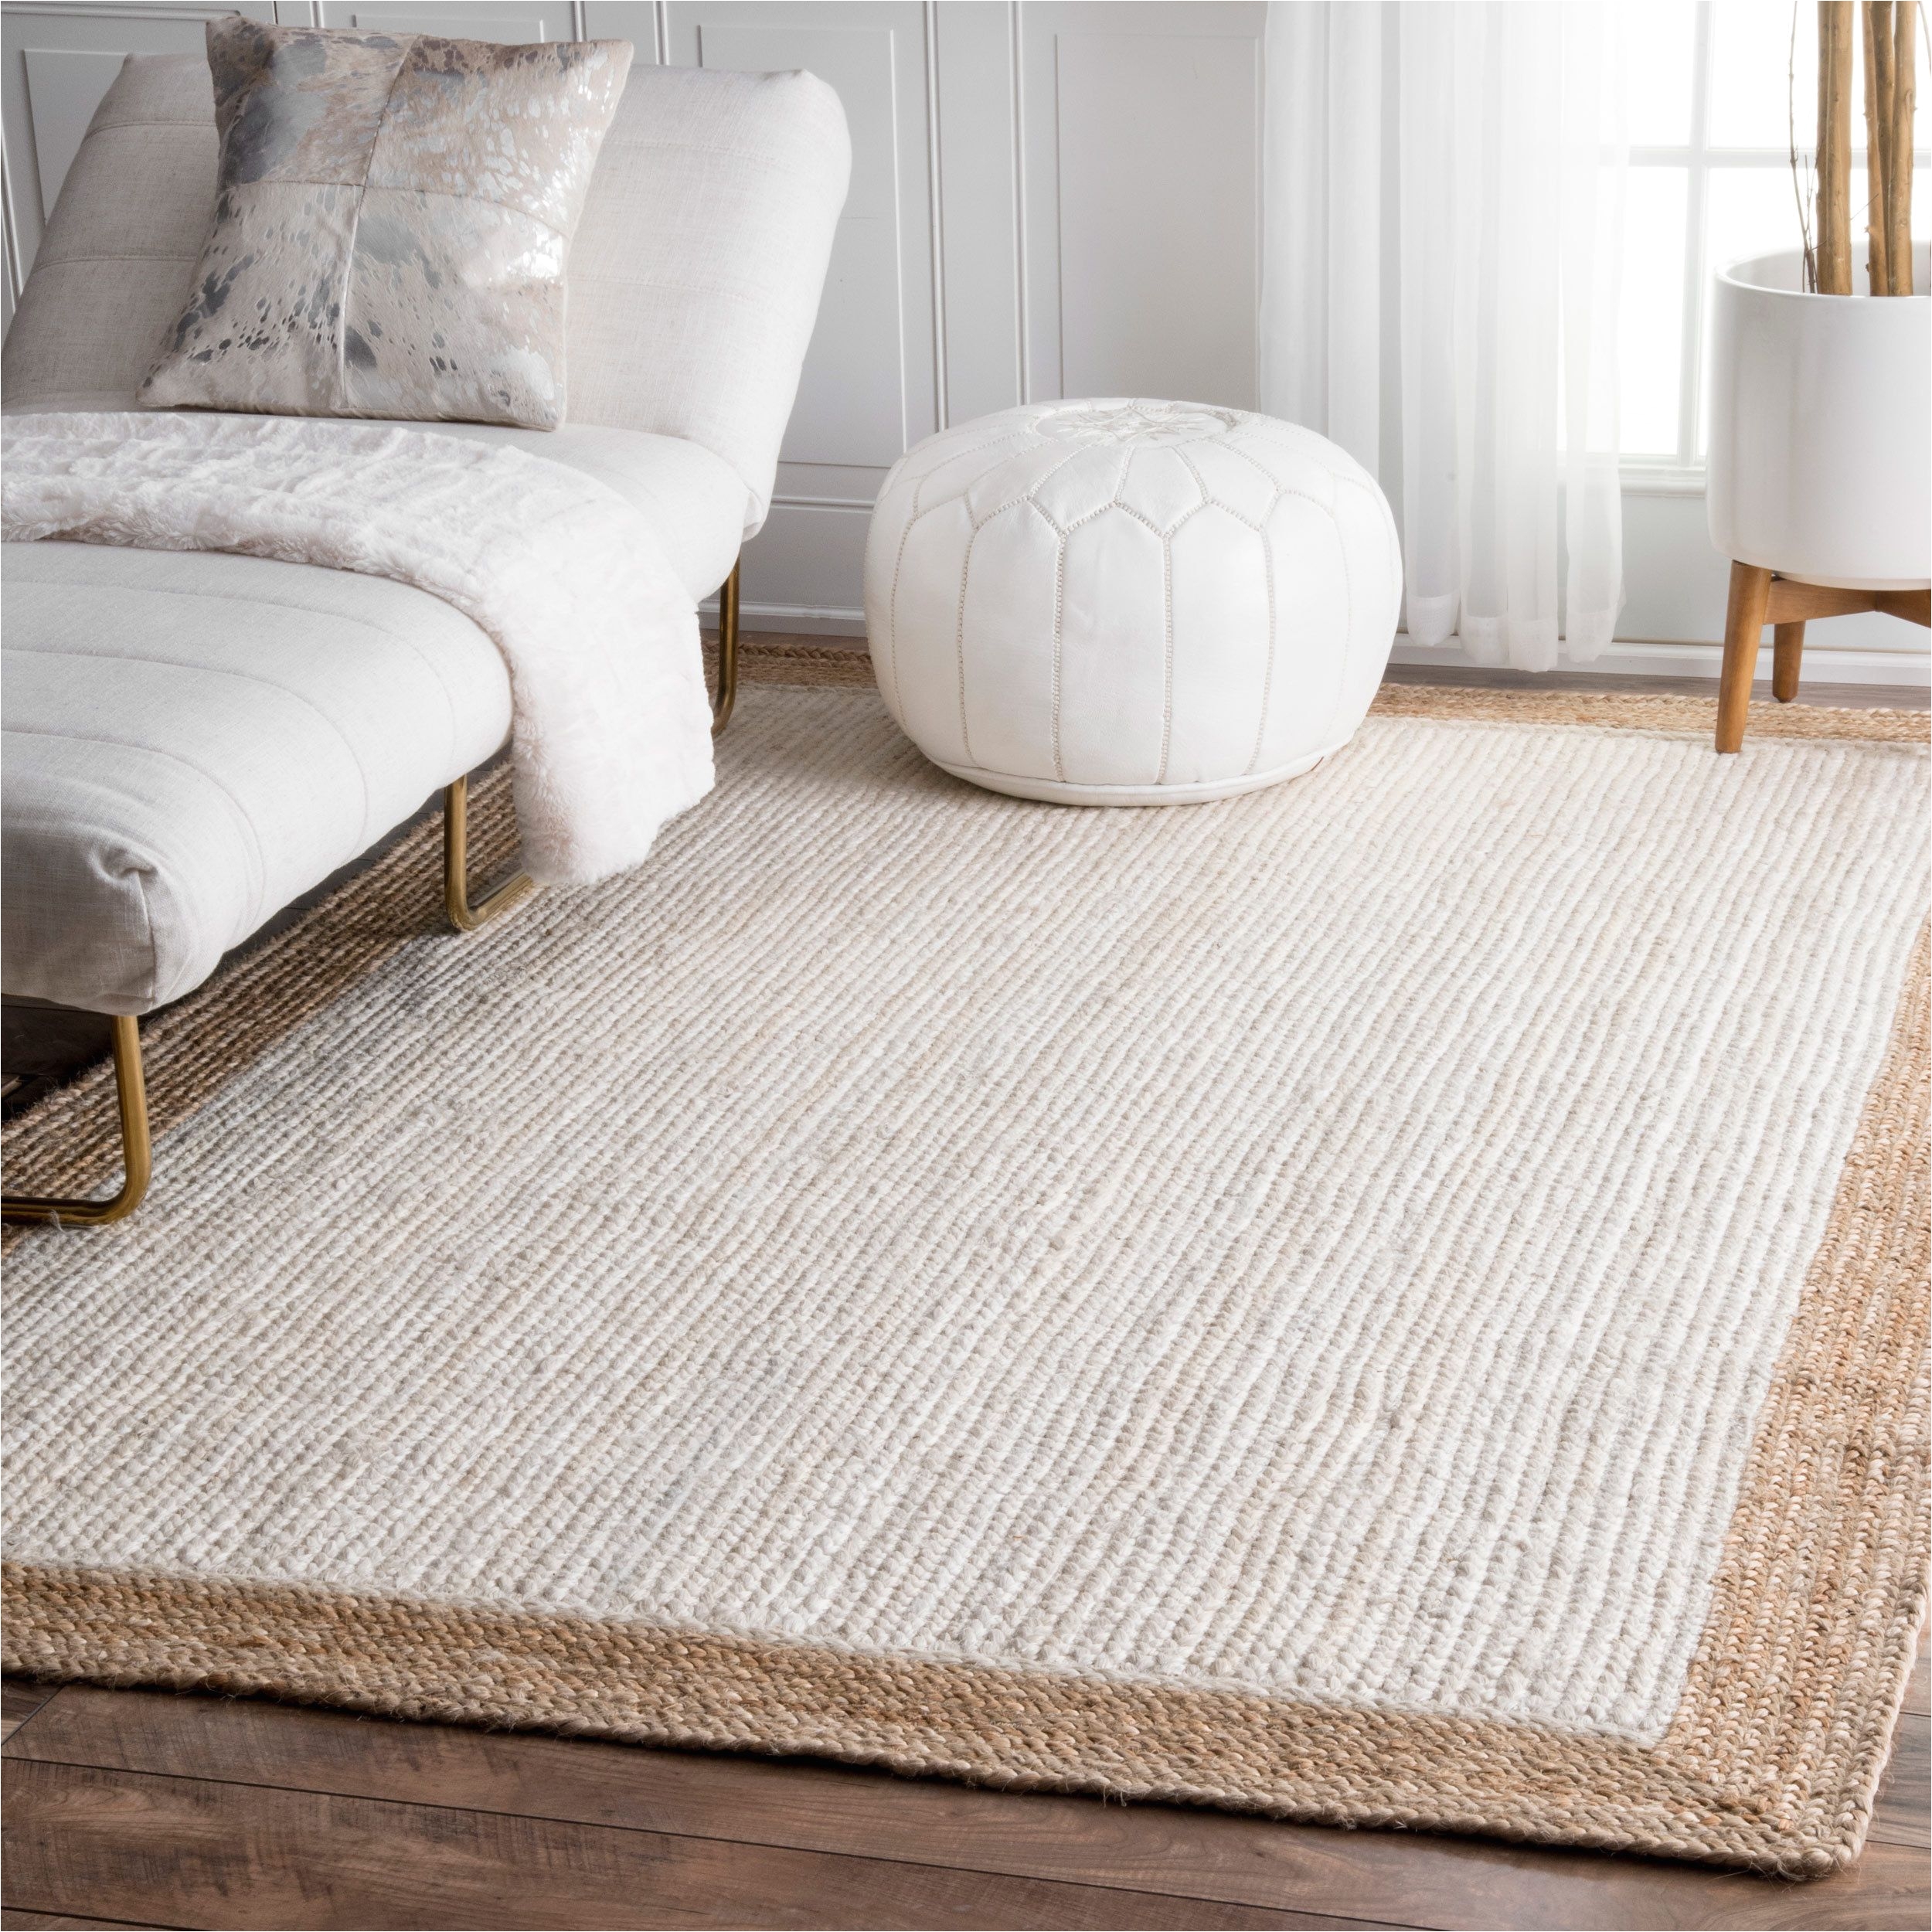 nuloom alexa eco natural fiber braided reversible border jute white rug 8 x 10 white beige size 8 x 10